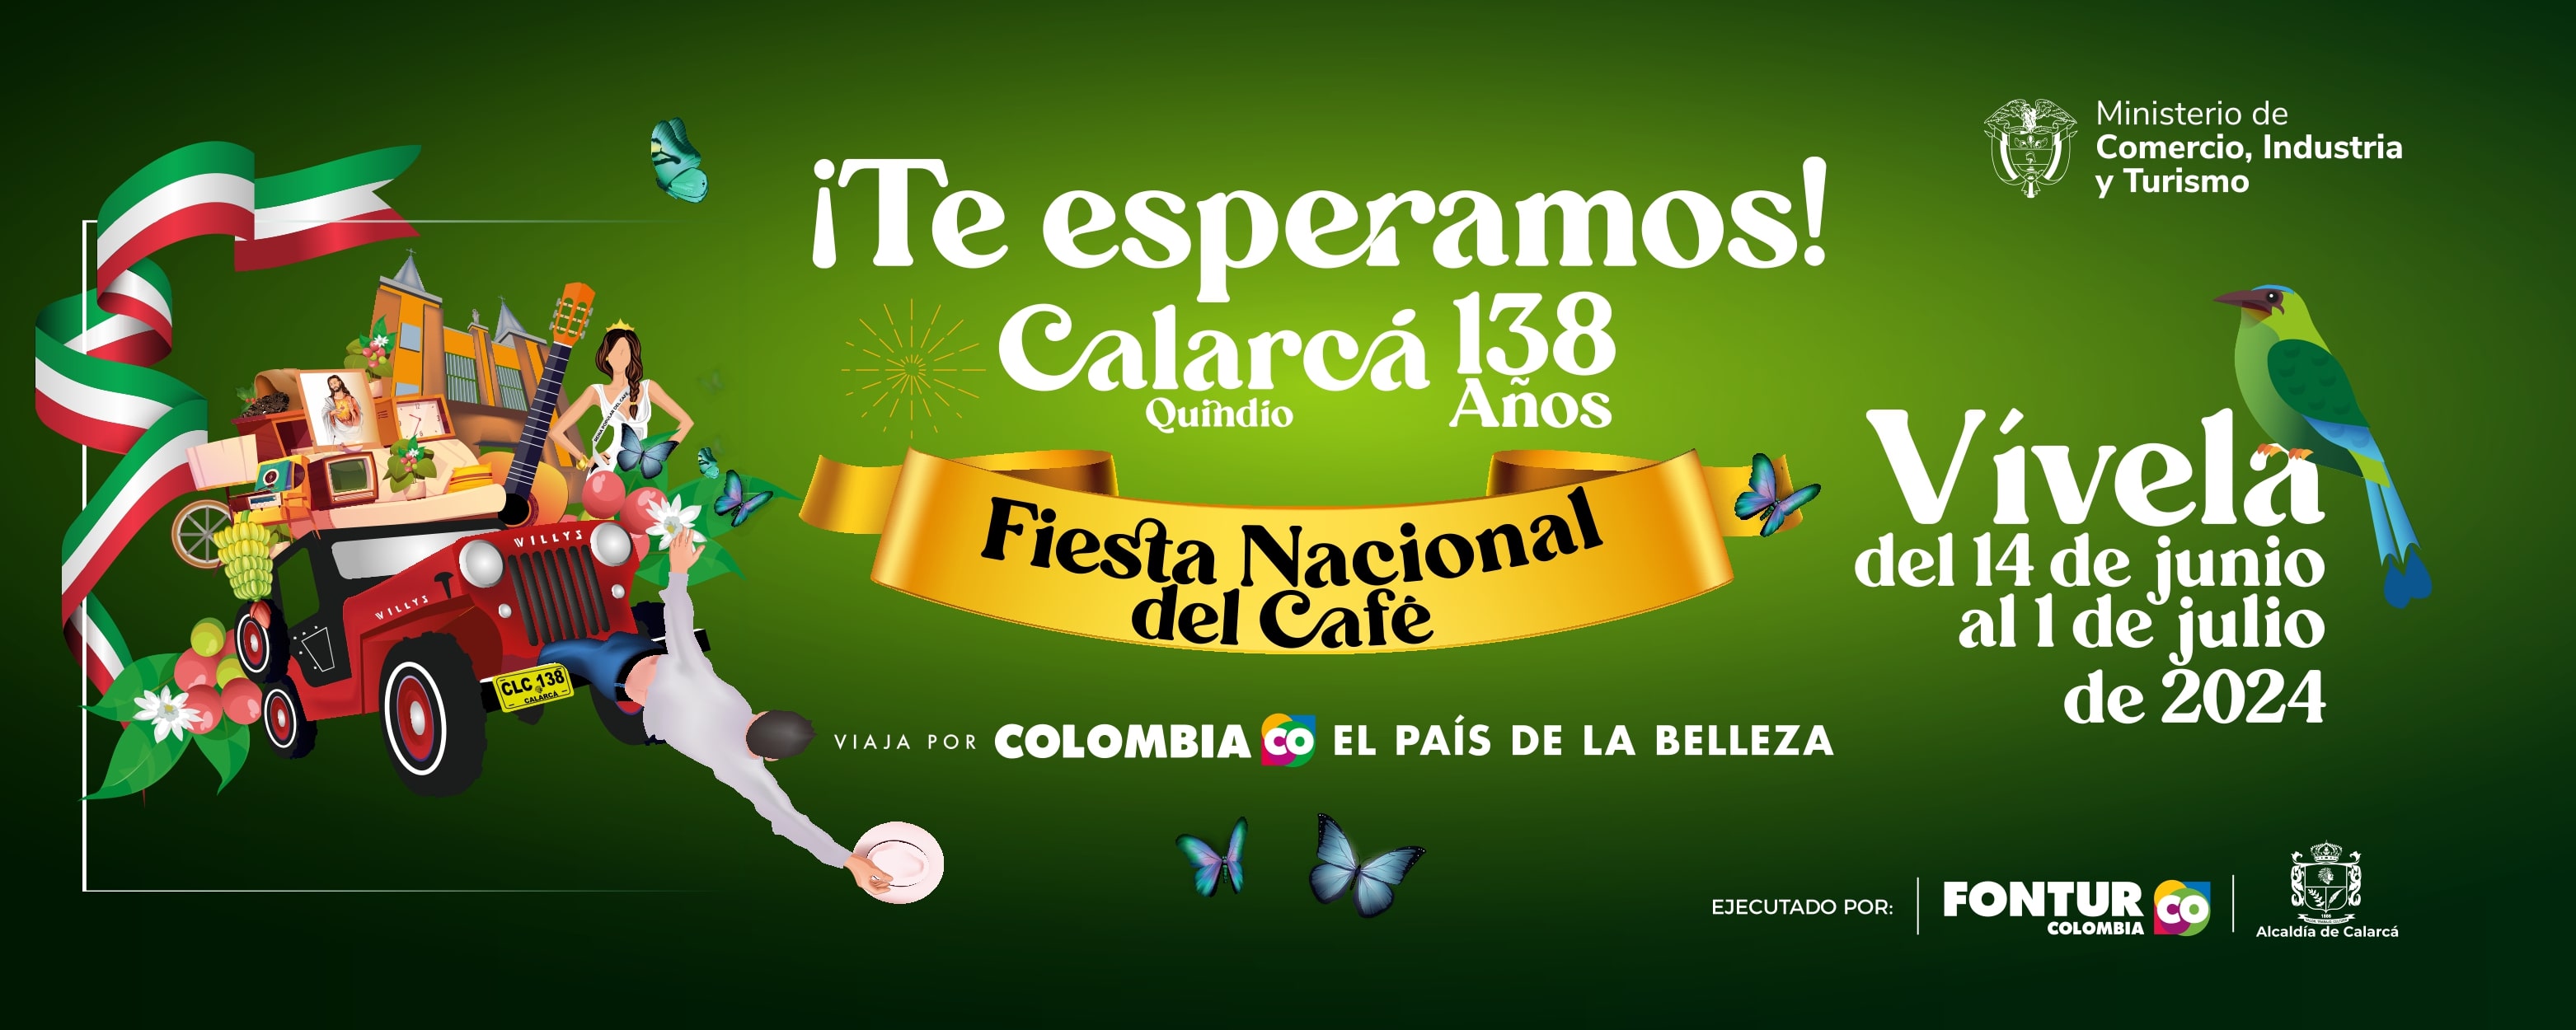 Fiesta Nacional del Café